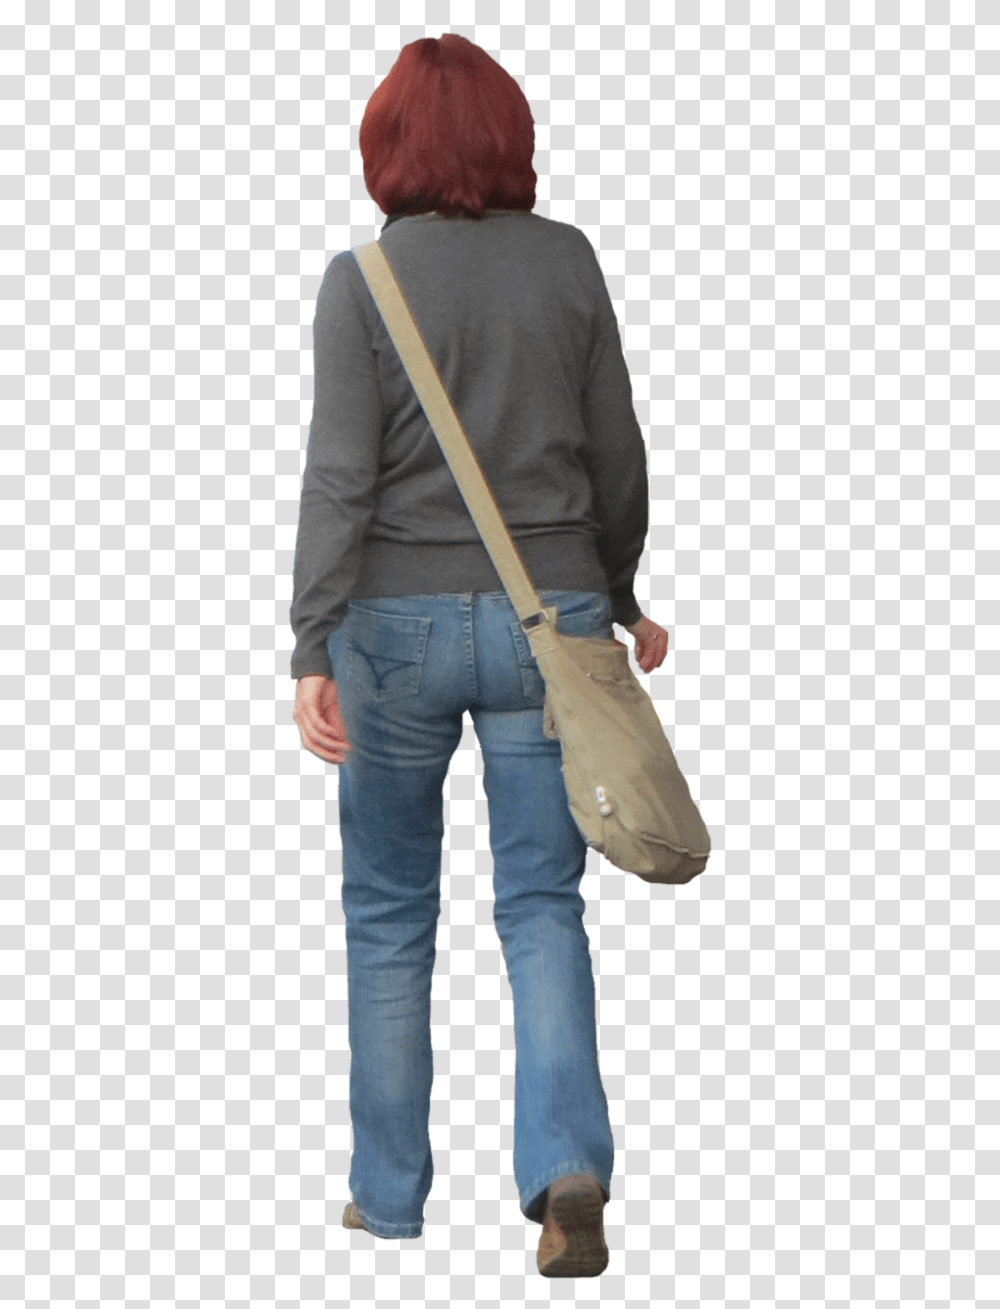 People Walking Back 1 Image Woman Walking Away, Pants, Clothing, Apparel, Jeans Transparent Png